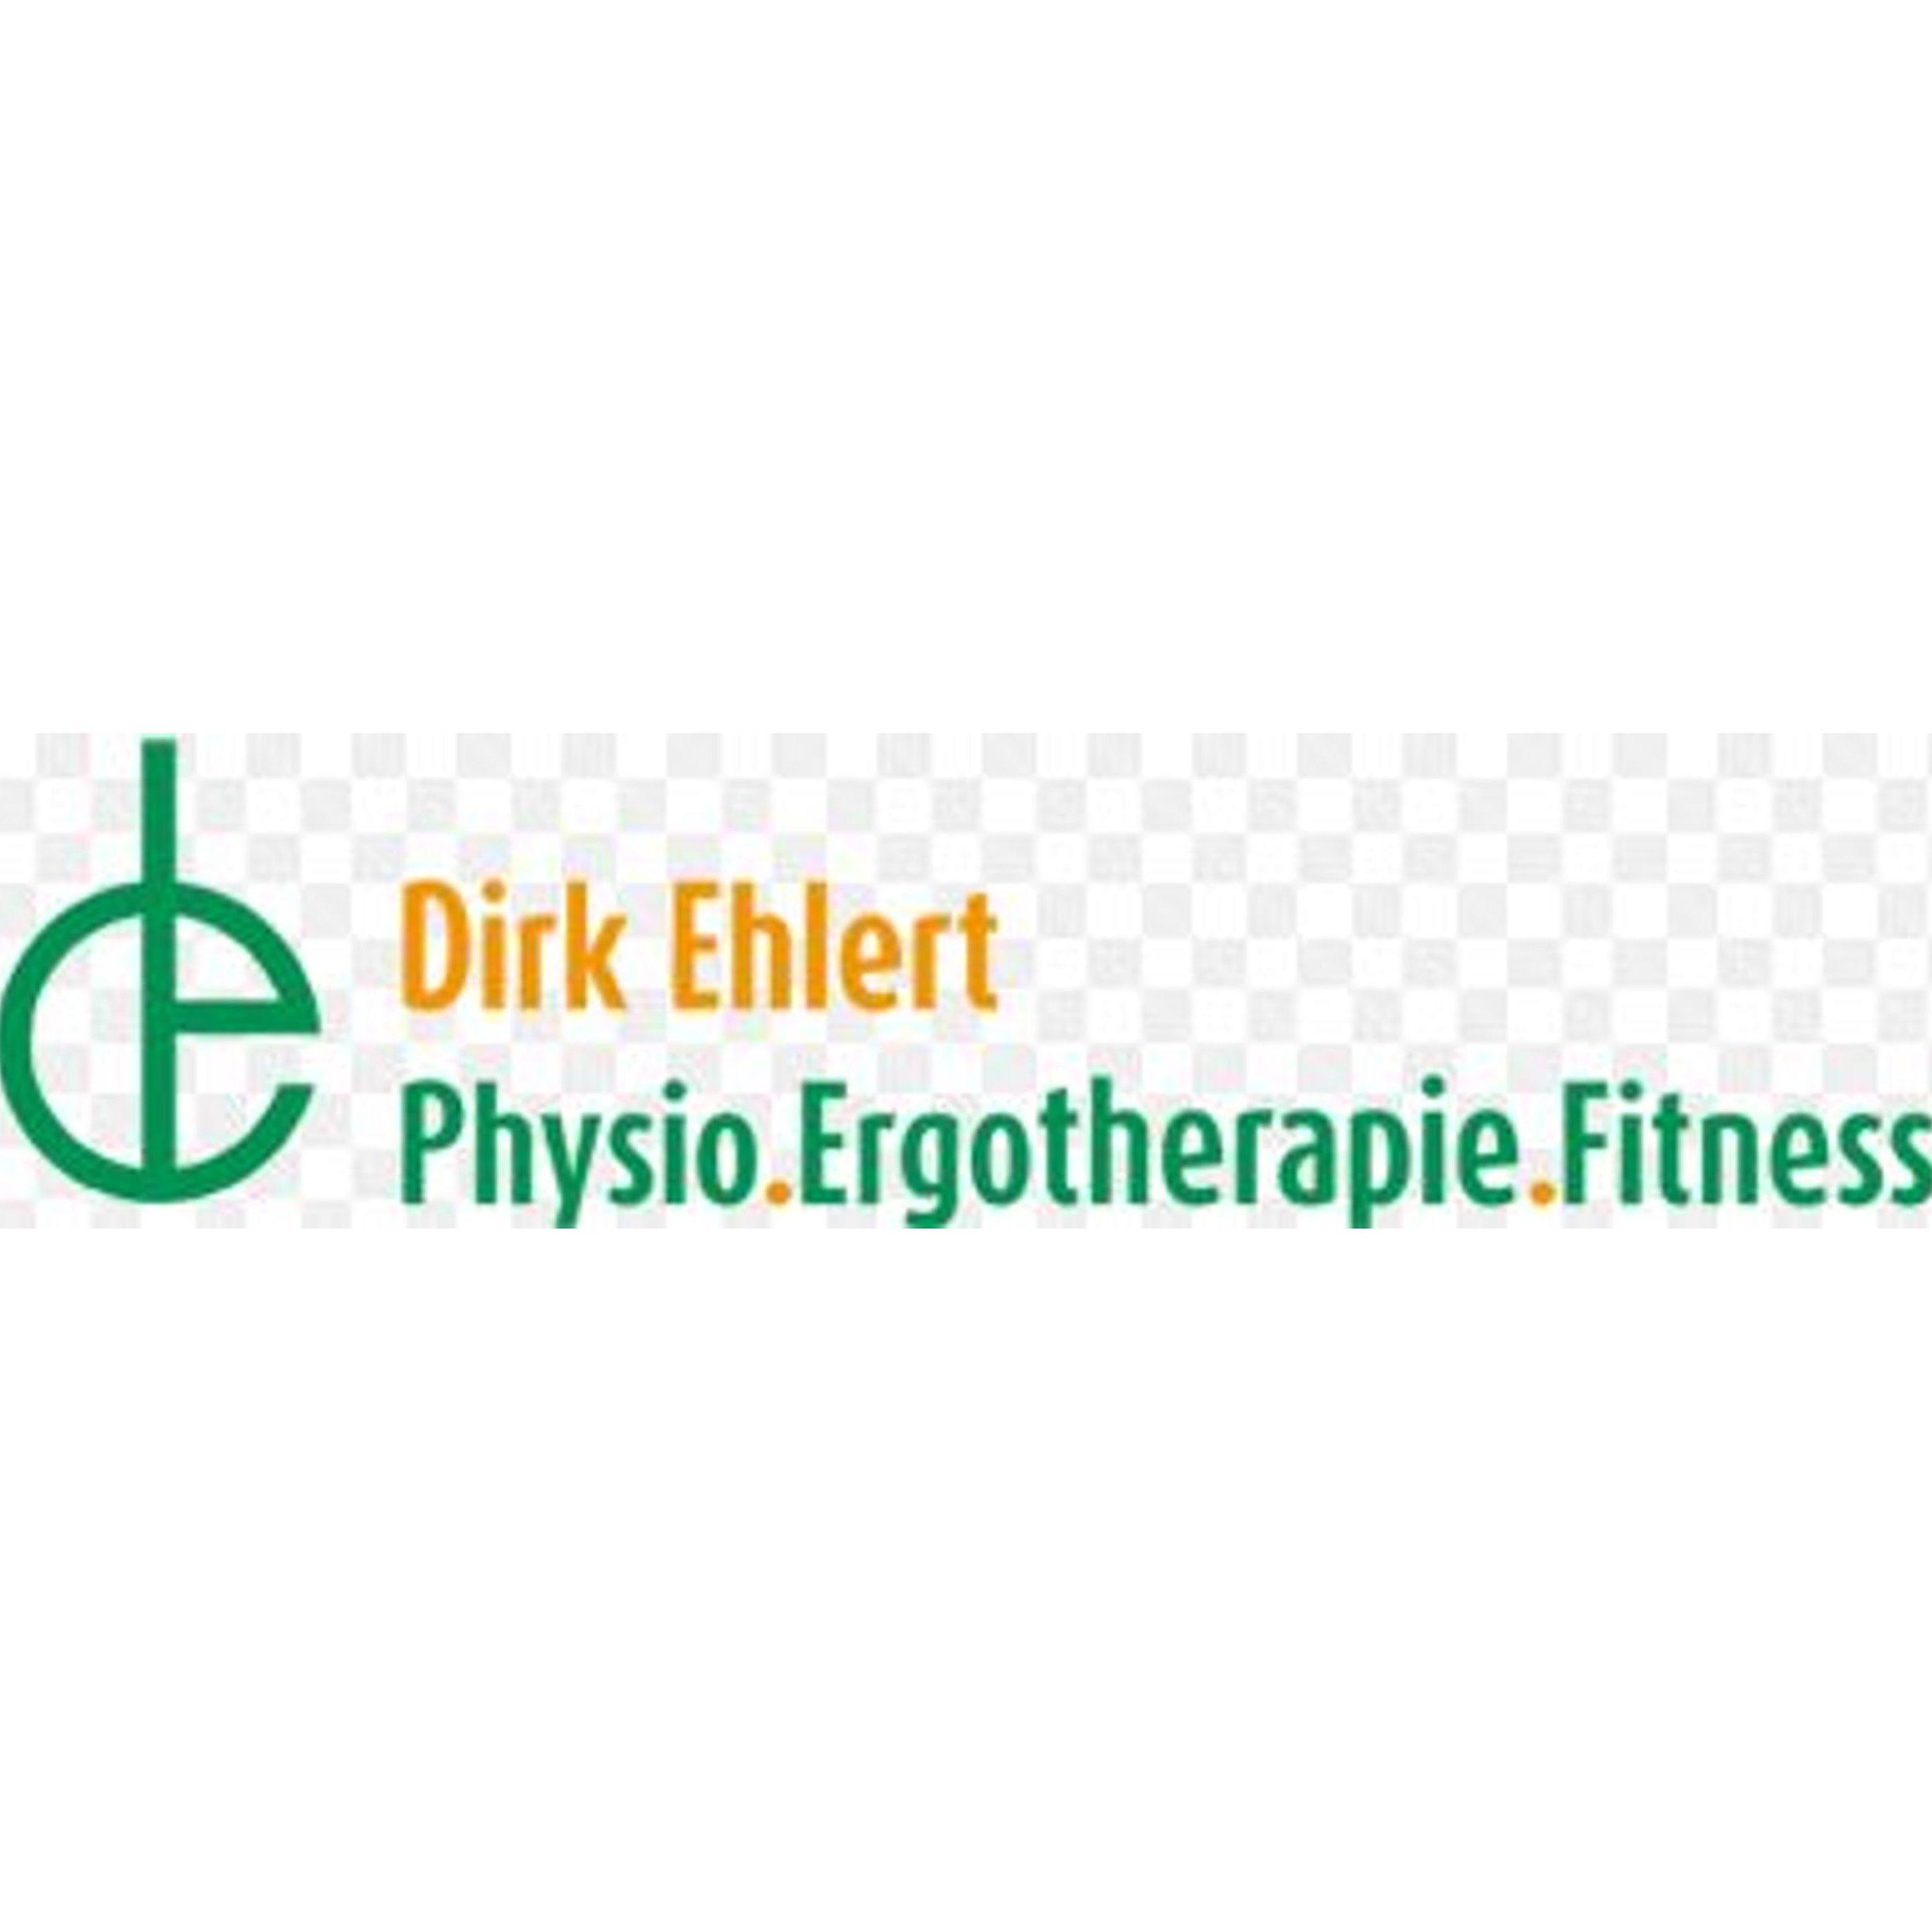 Dirk Ehlert Physio. Ergotherapie. Fitness  